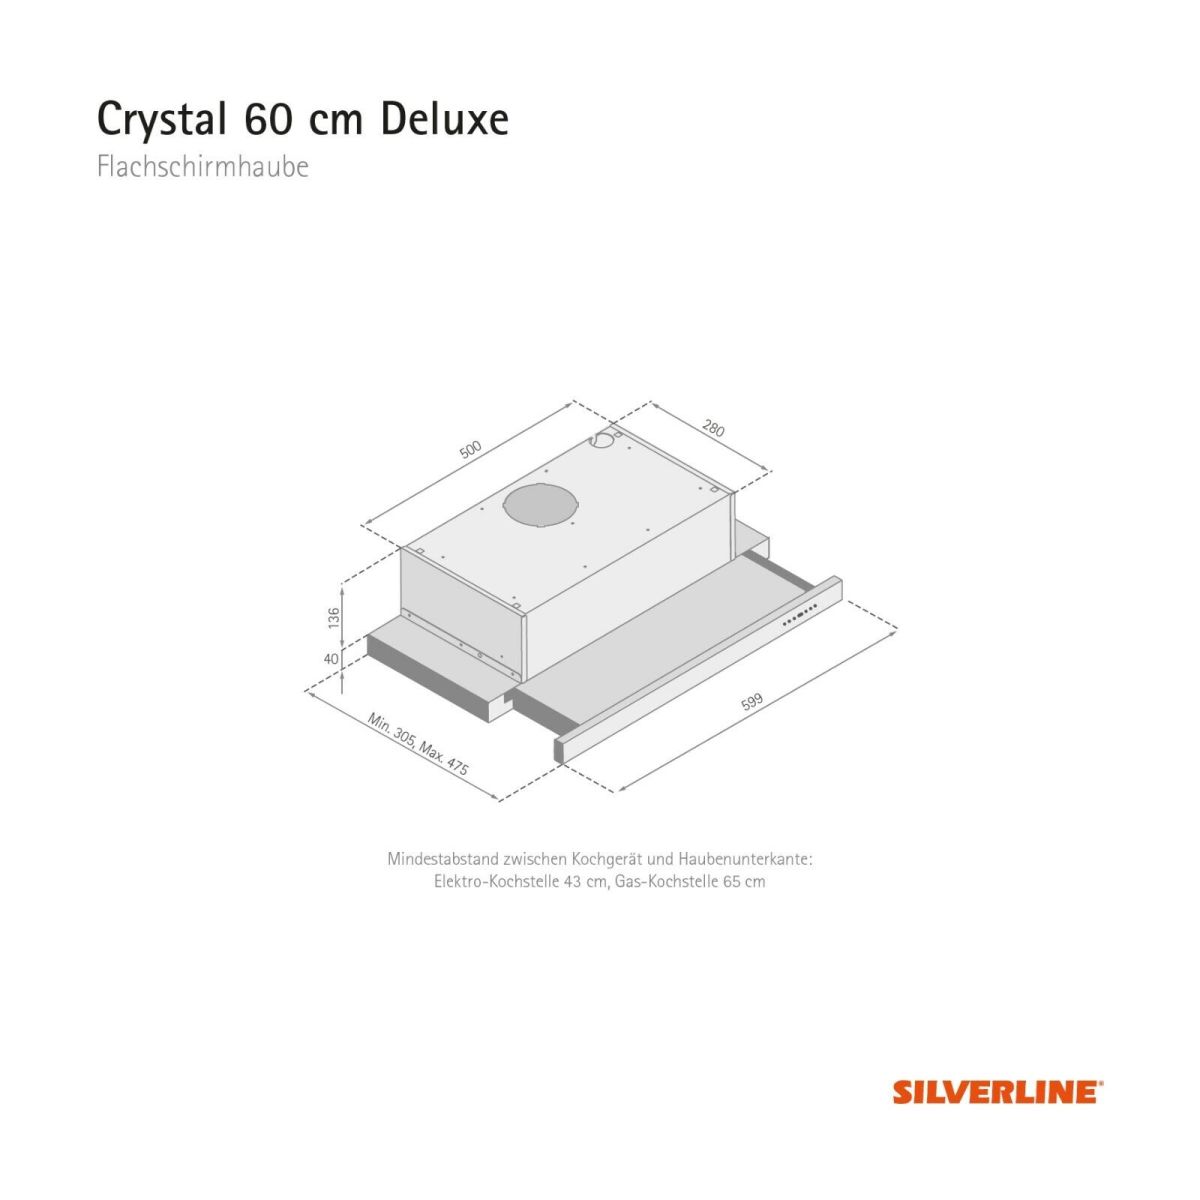 Silverline CRF 610 E Crystal Deluxe 60 Flachschirmhaube EEK:D